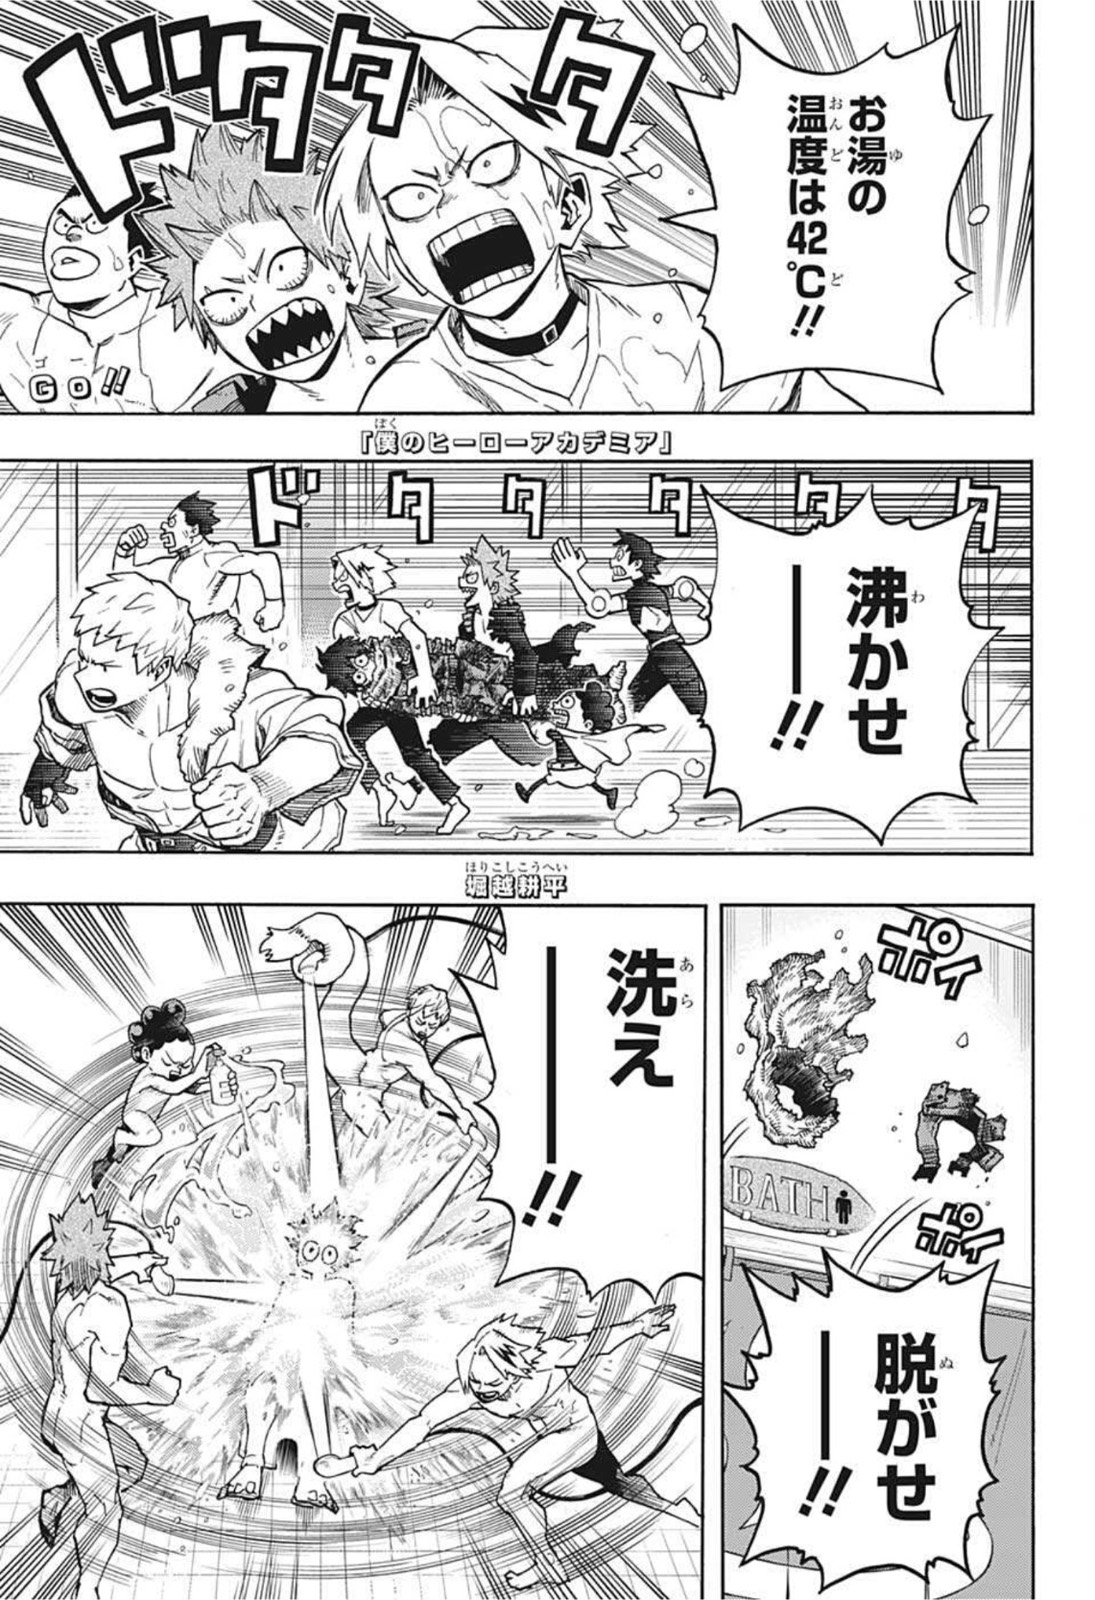 Boku no Hero Academia - Chapter 327 - Page 1